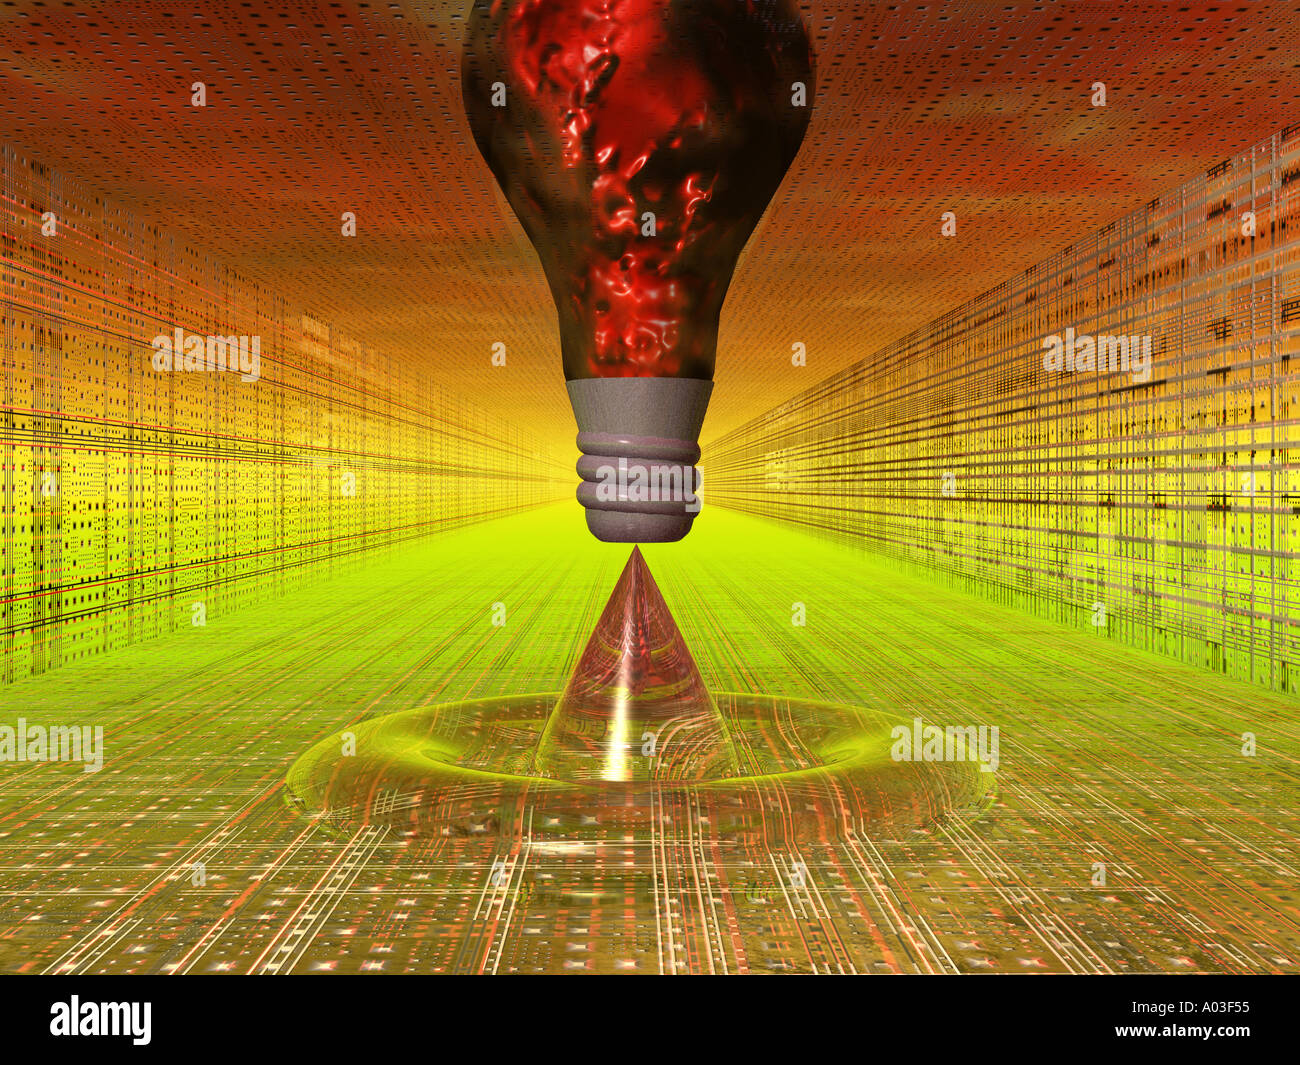 Cloud filled red light bulb in hi tech scene Stock Photo